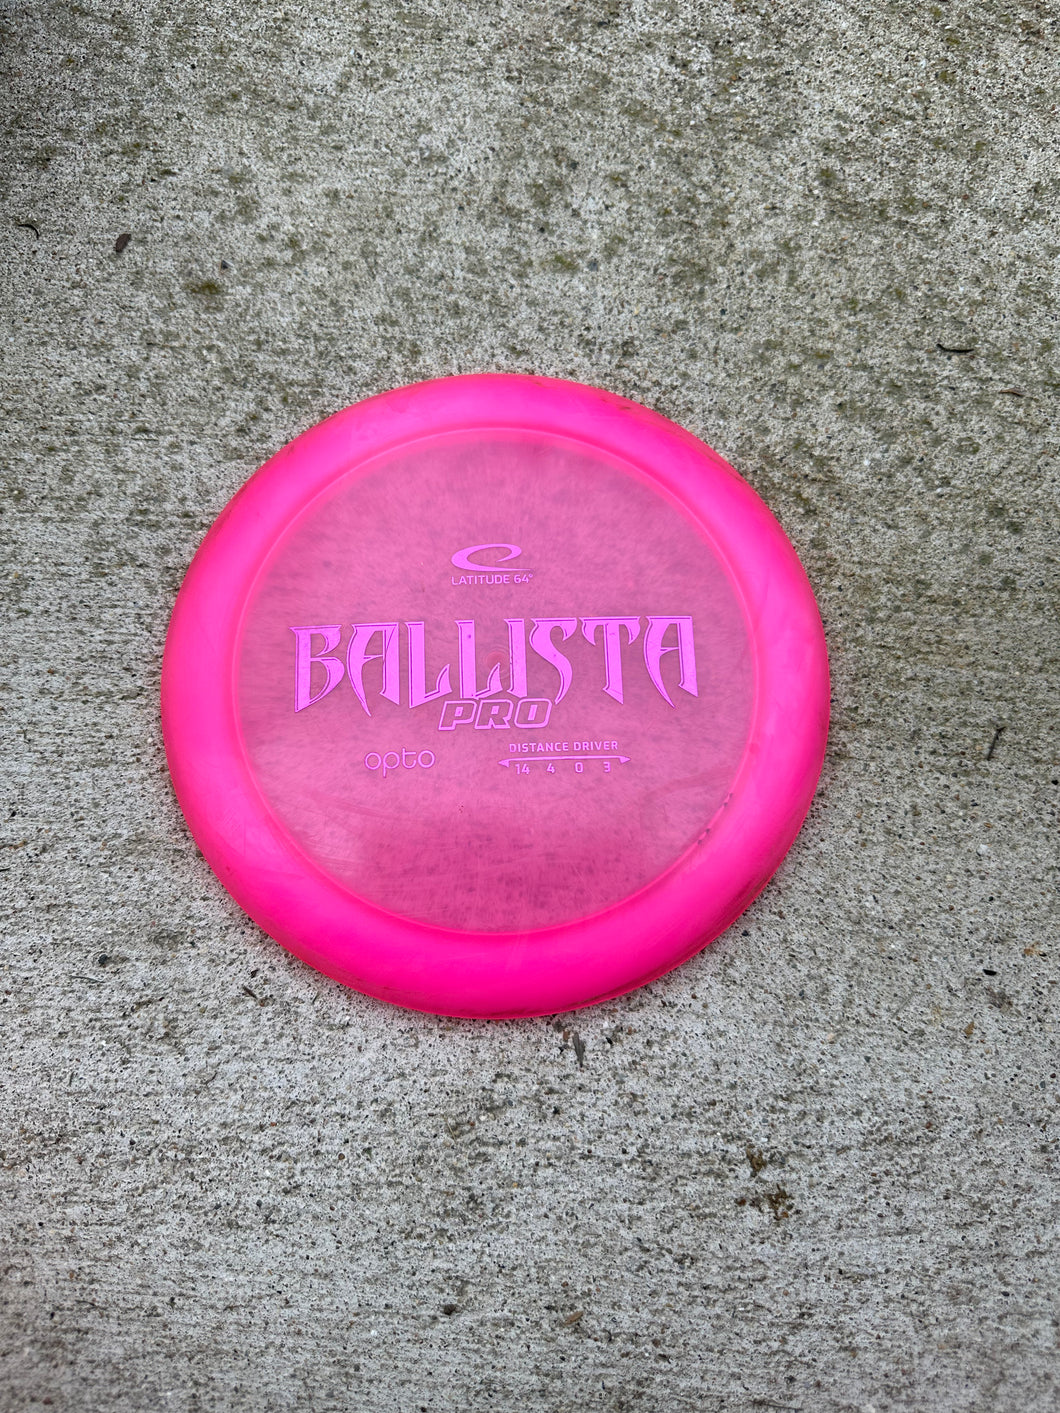 Latitude 64 Ballista Pro Distance Driver 173g pink